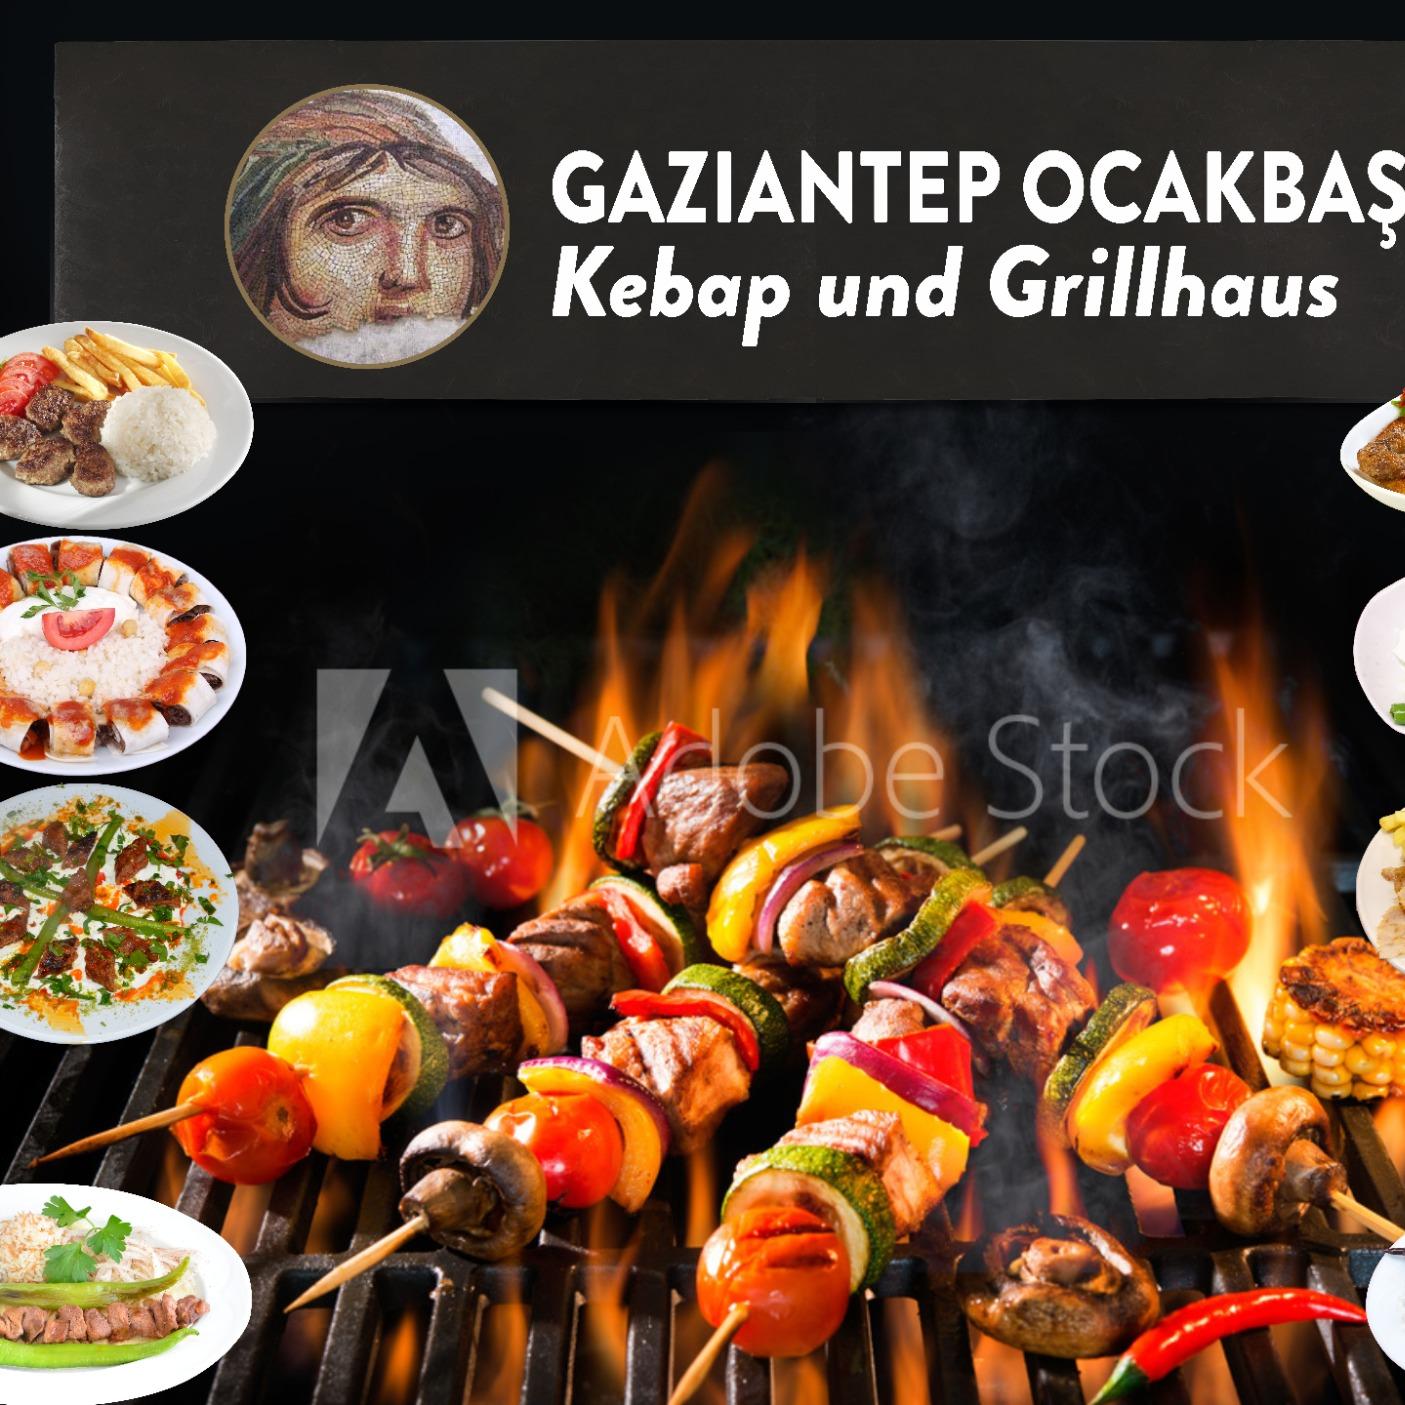 Restaurant "Gaziantep Ocakbasi Kallenberg" in Stuttgart